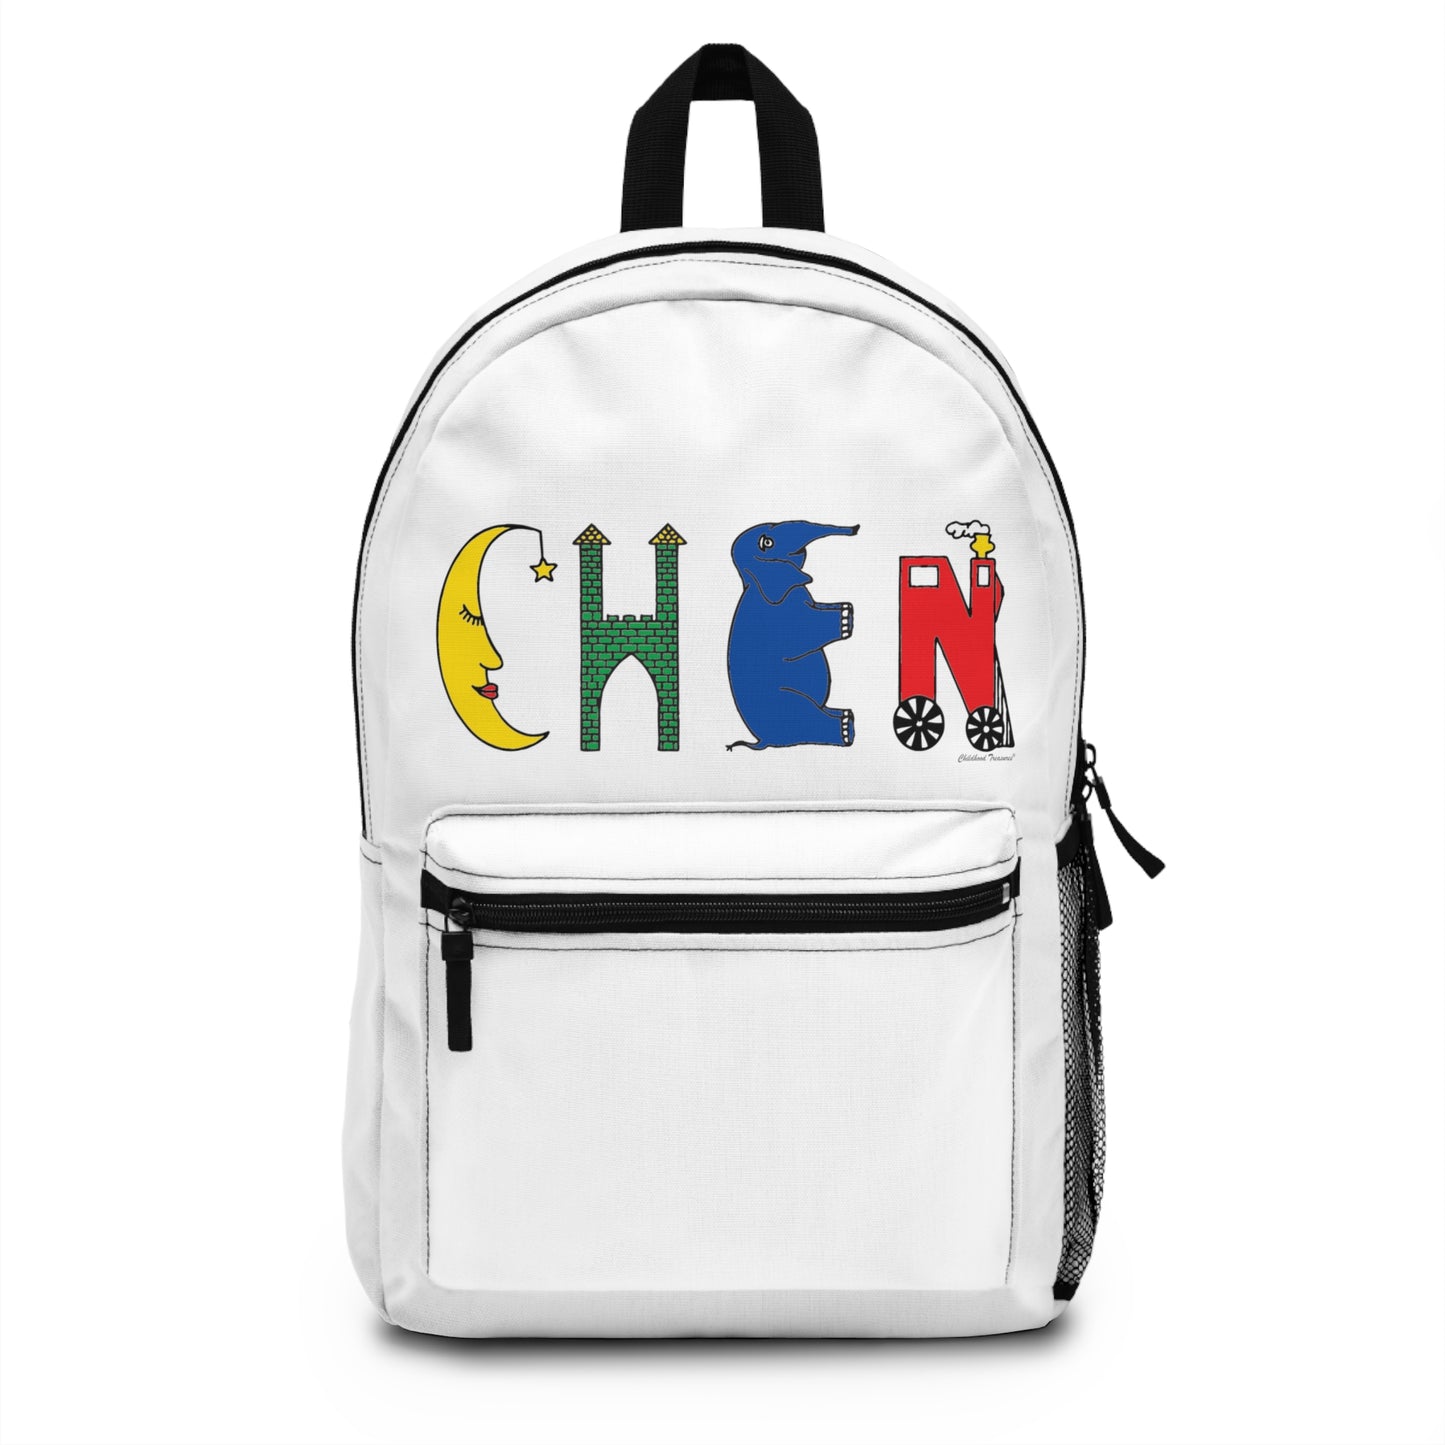 Personalized Backpack - Original Alphabet - Childhood Treasures - Backpack